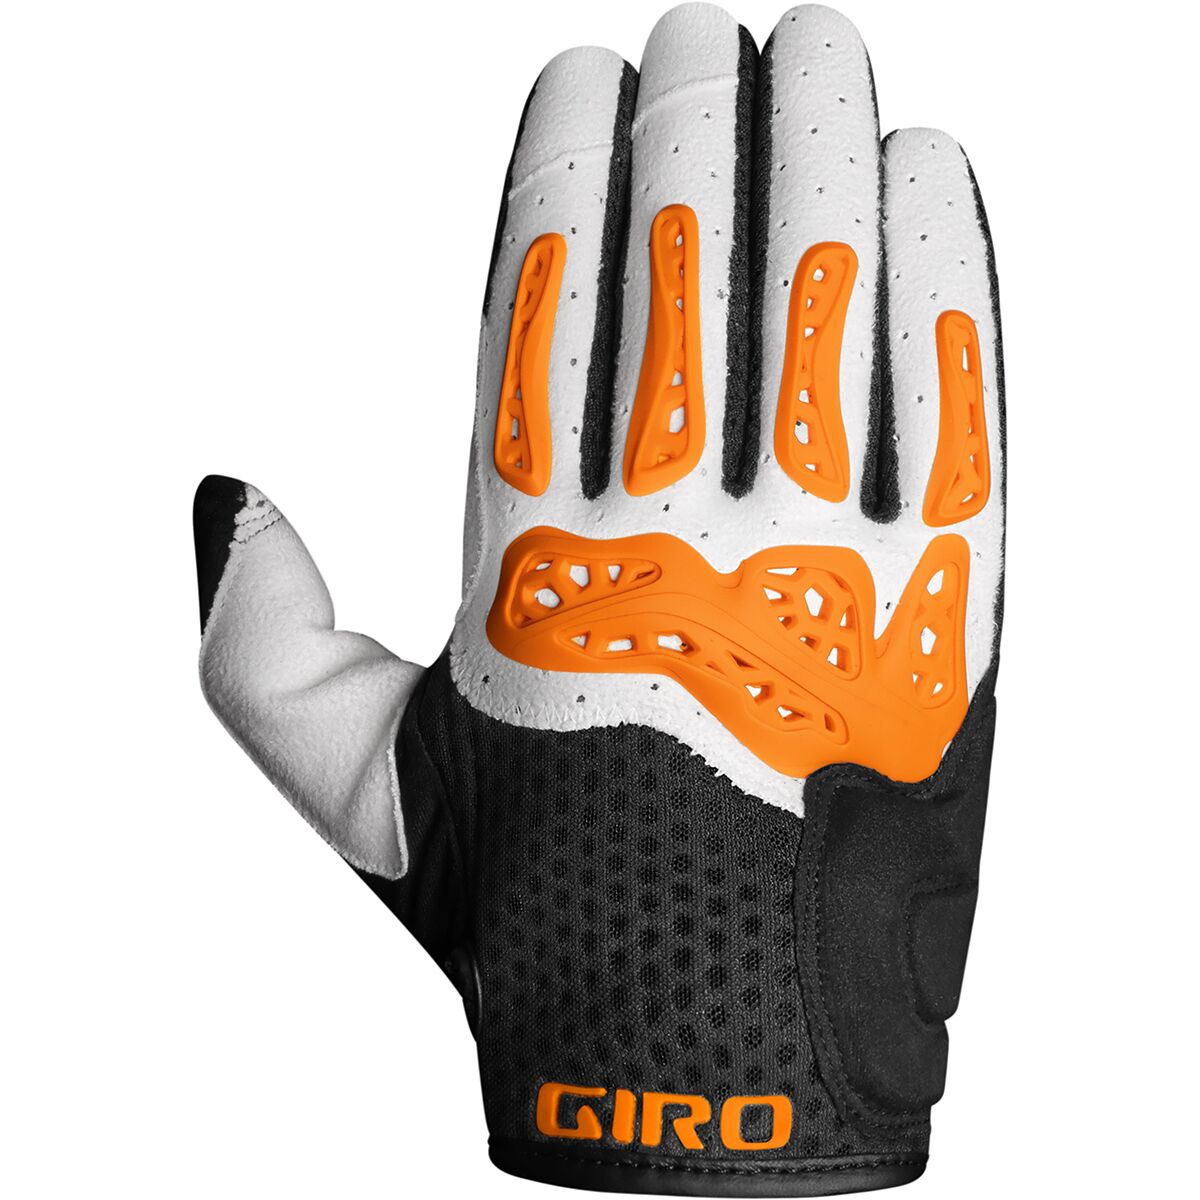 Giro Gnar Glove - Men's Orange/Light Sharkskin, XL